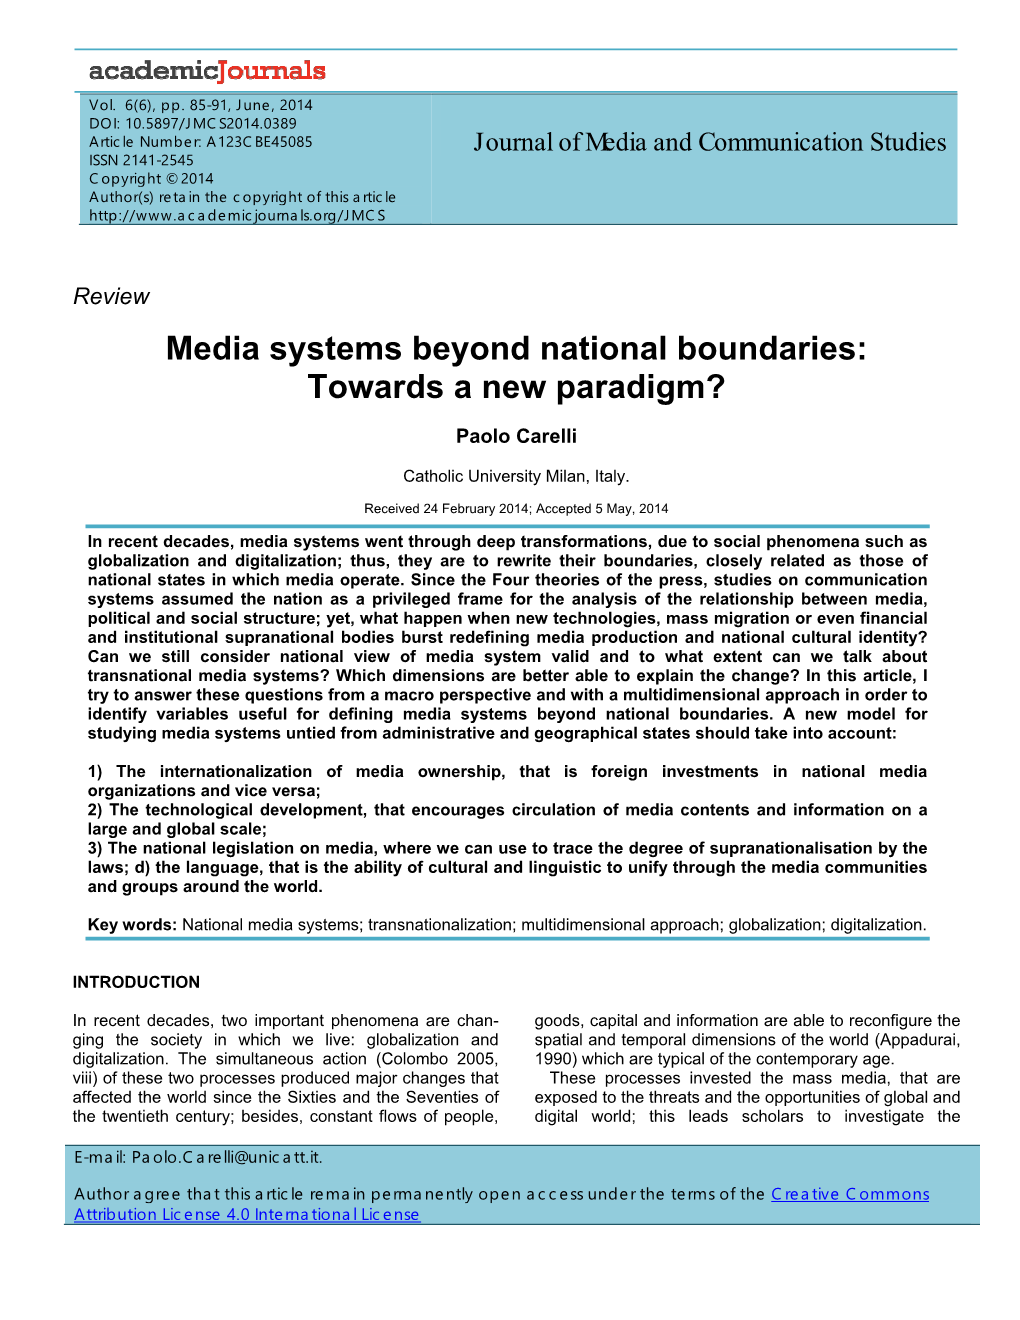 Media Systems Beyond National Boundaries: Towards a New Paradigm?